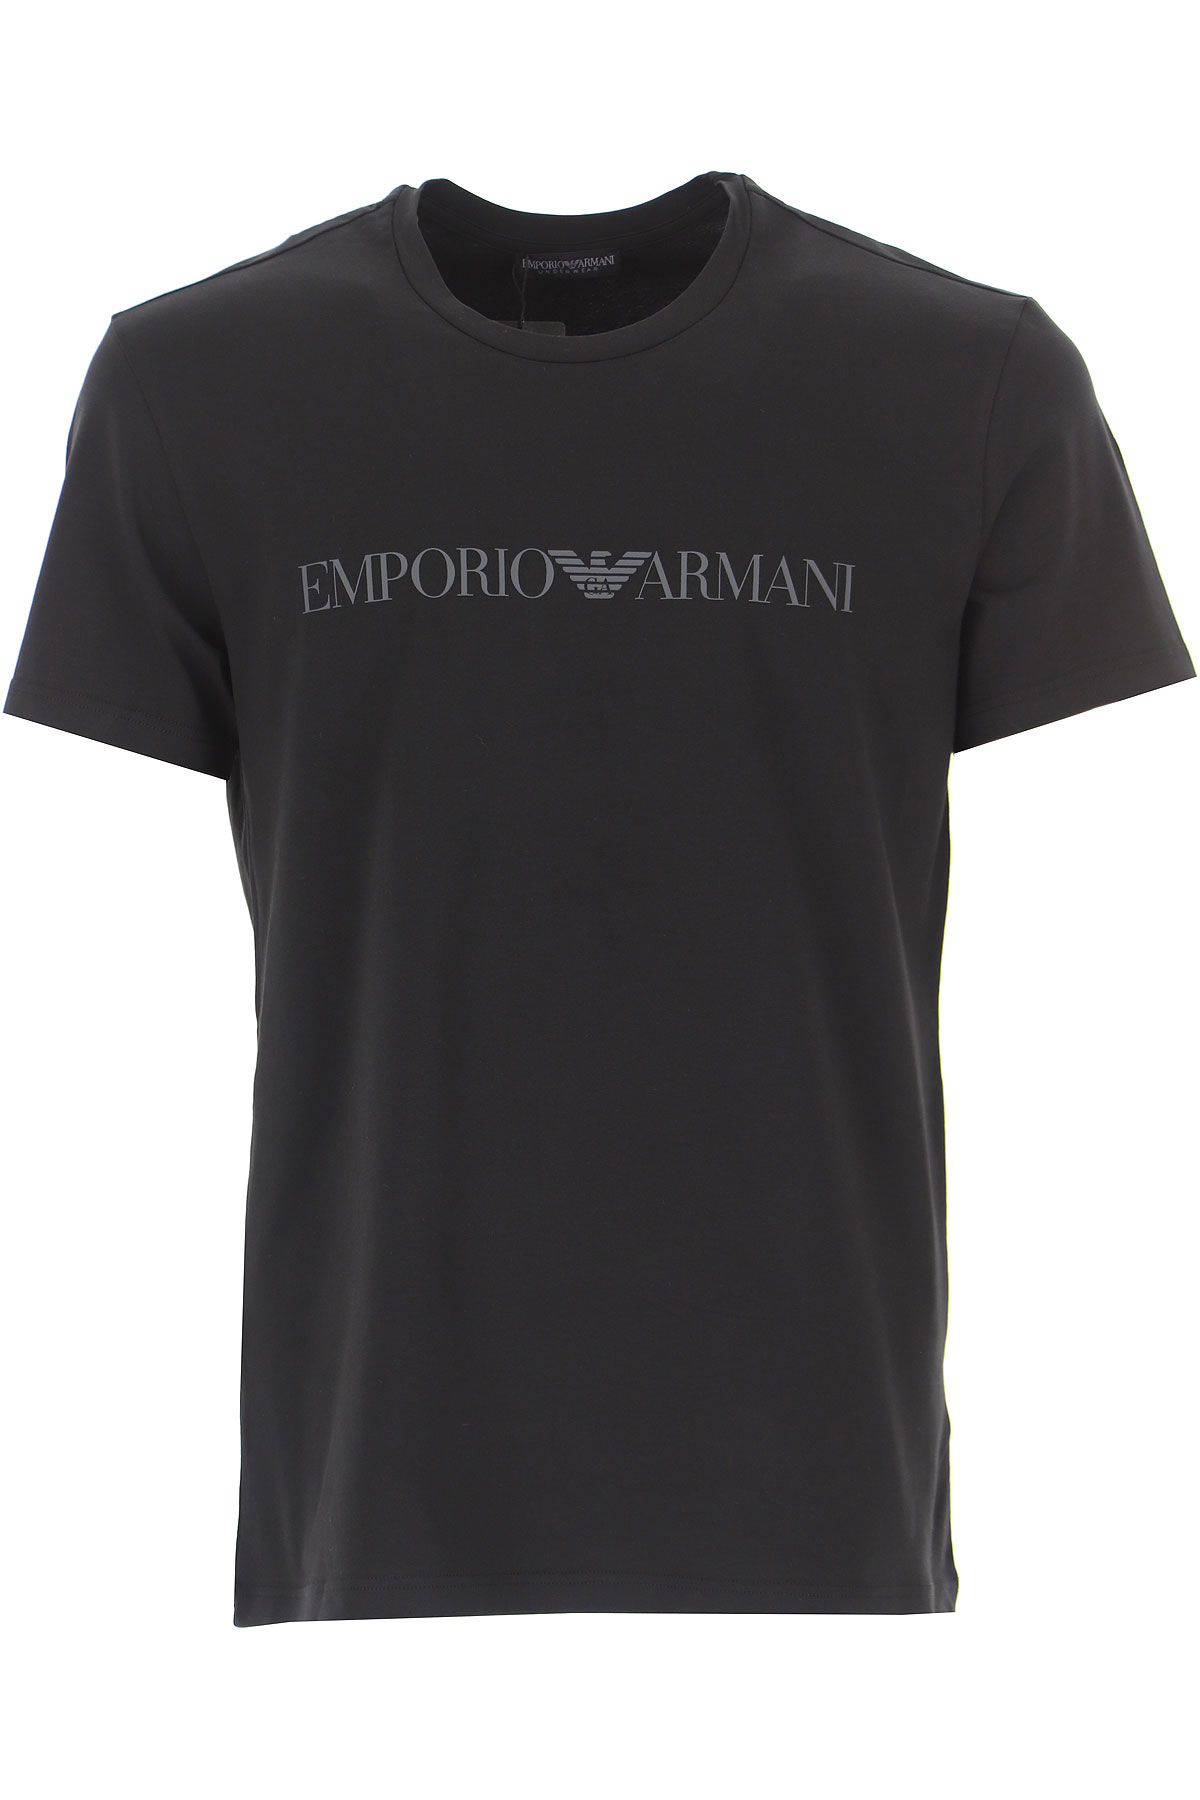 Mens Clothing Emporio Armani, Style code: 110853-0a525-00020